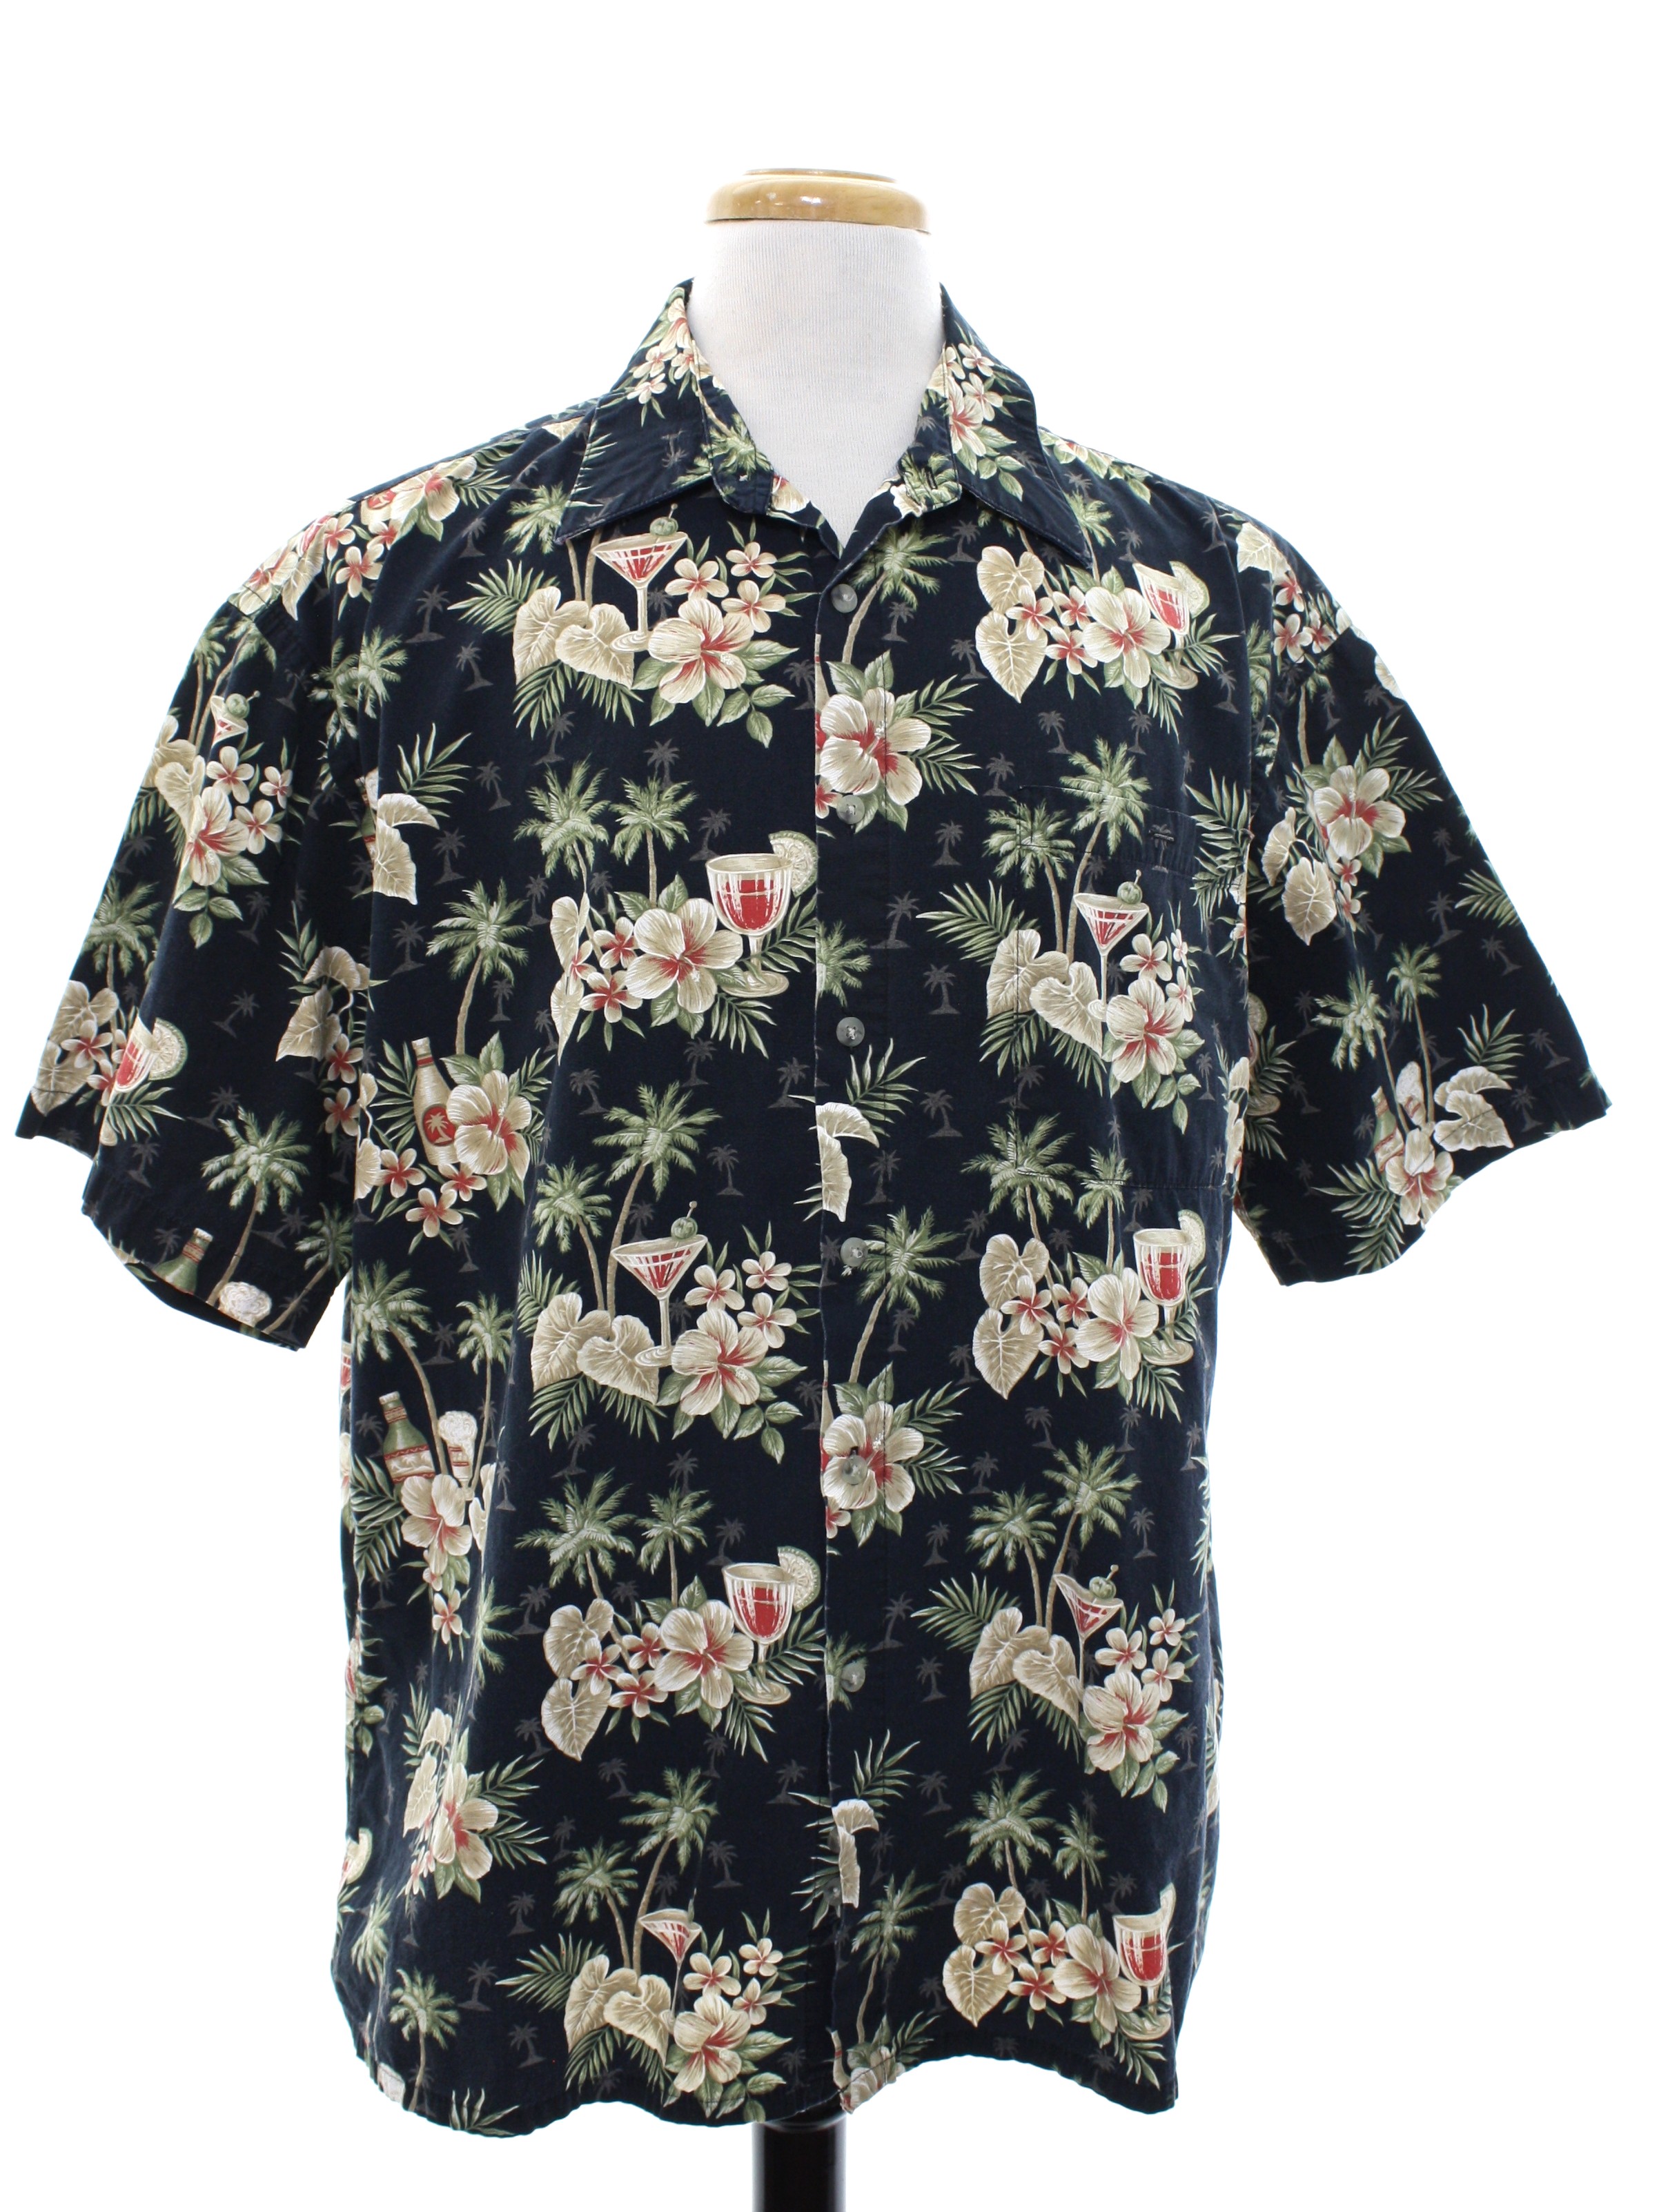 90s Campia Moda Hawaiian Shirt: 90s -Campia Moda- Mens slightly faded black background cotton short sleeve hawaiian shirt booze, flowers, trees and leaves print. Button up front with plastic